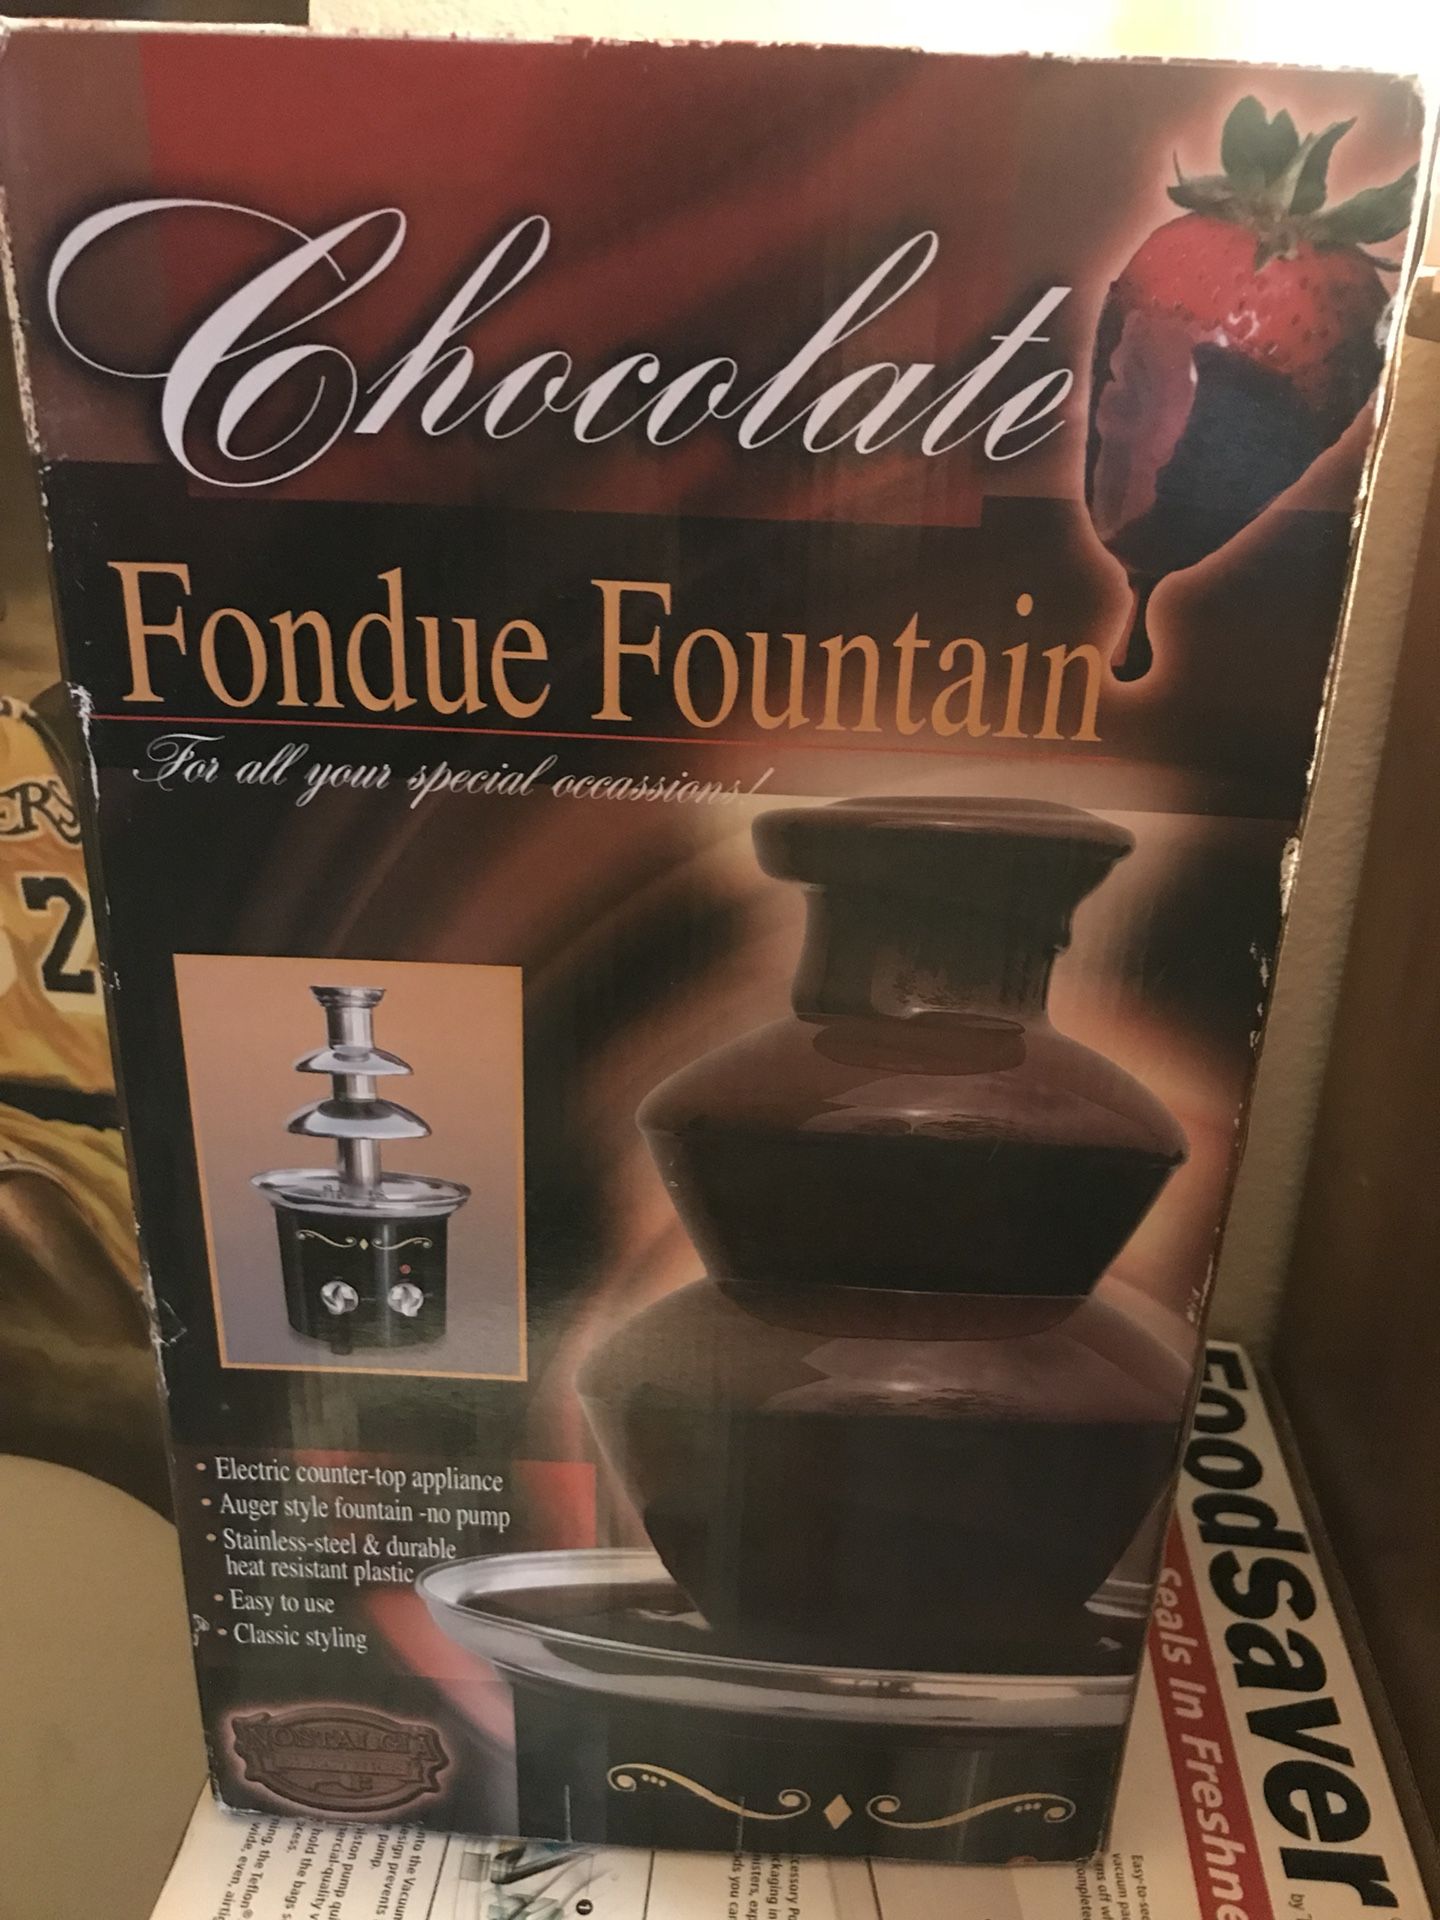 Chocolate Fondue Fountain Stainless Steel Countertop Cheese Ranch Nostalgia Elec